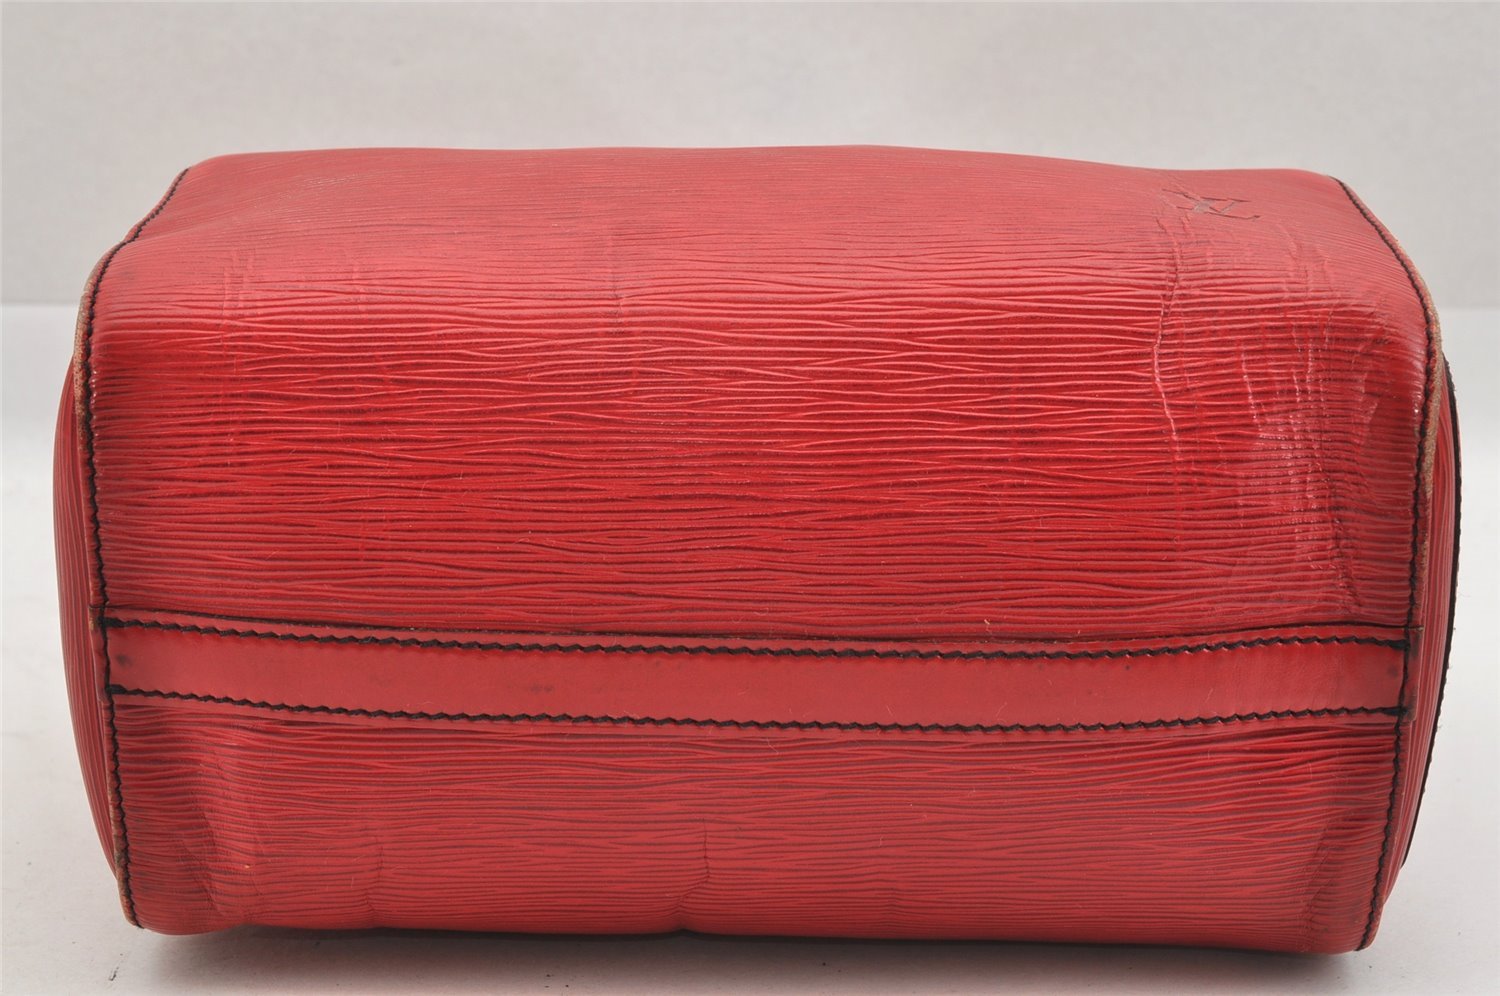 Authentic Louis Vuitton Epi Speedy 25 Hand Boston Bag Red M43017 Junk 9125I